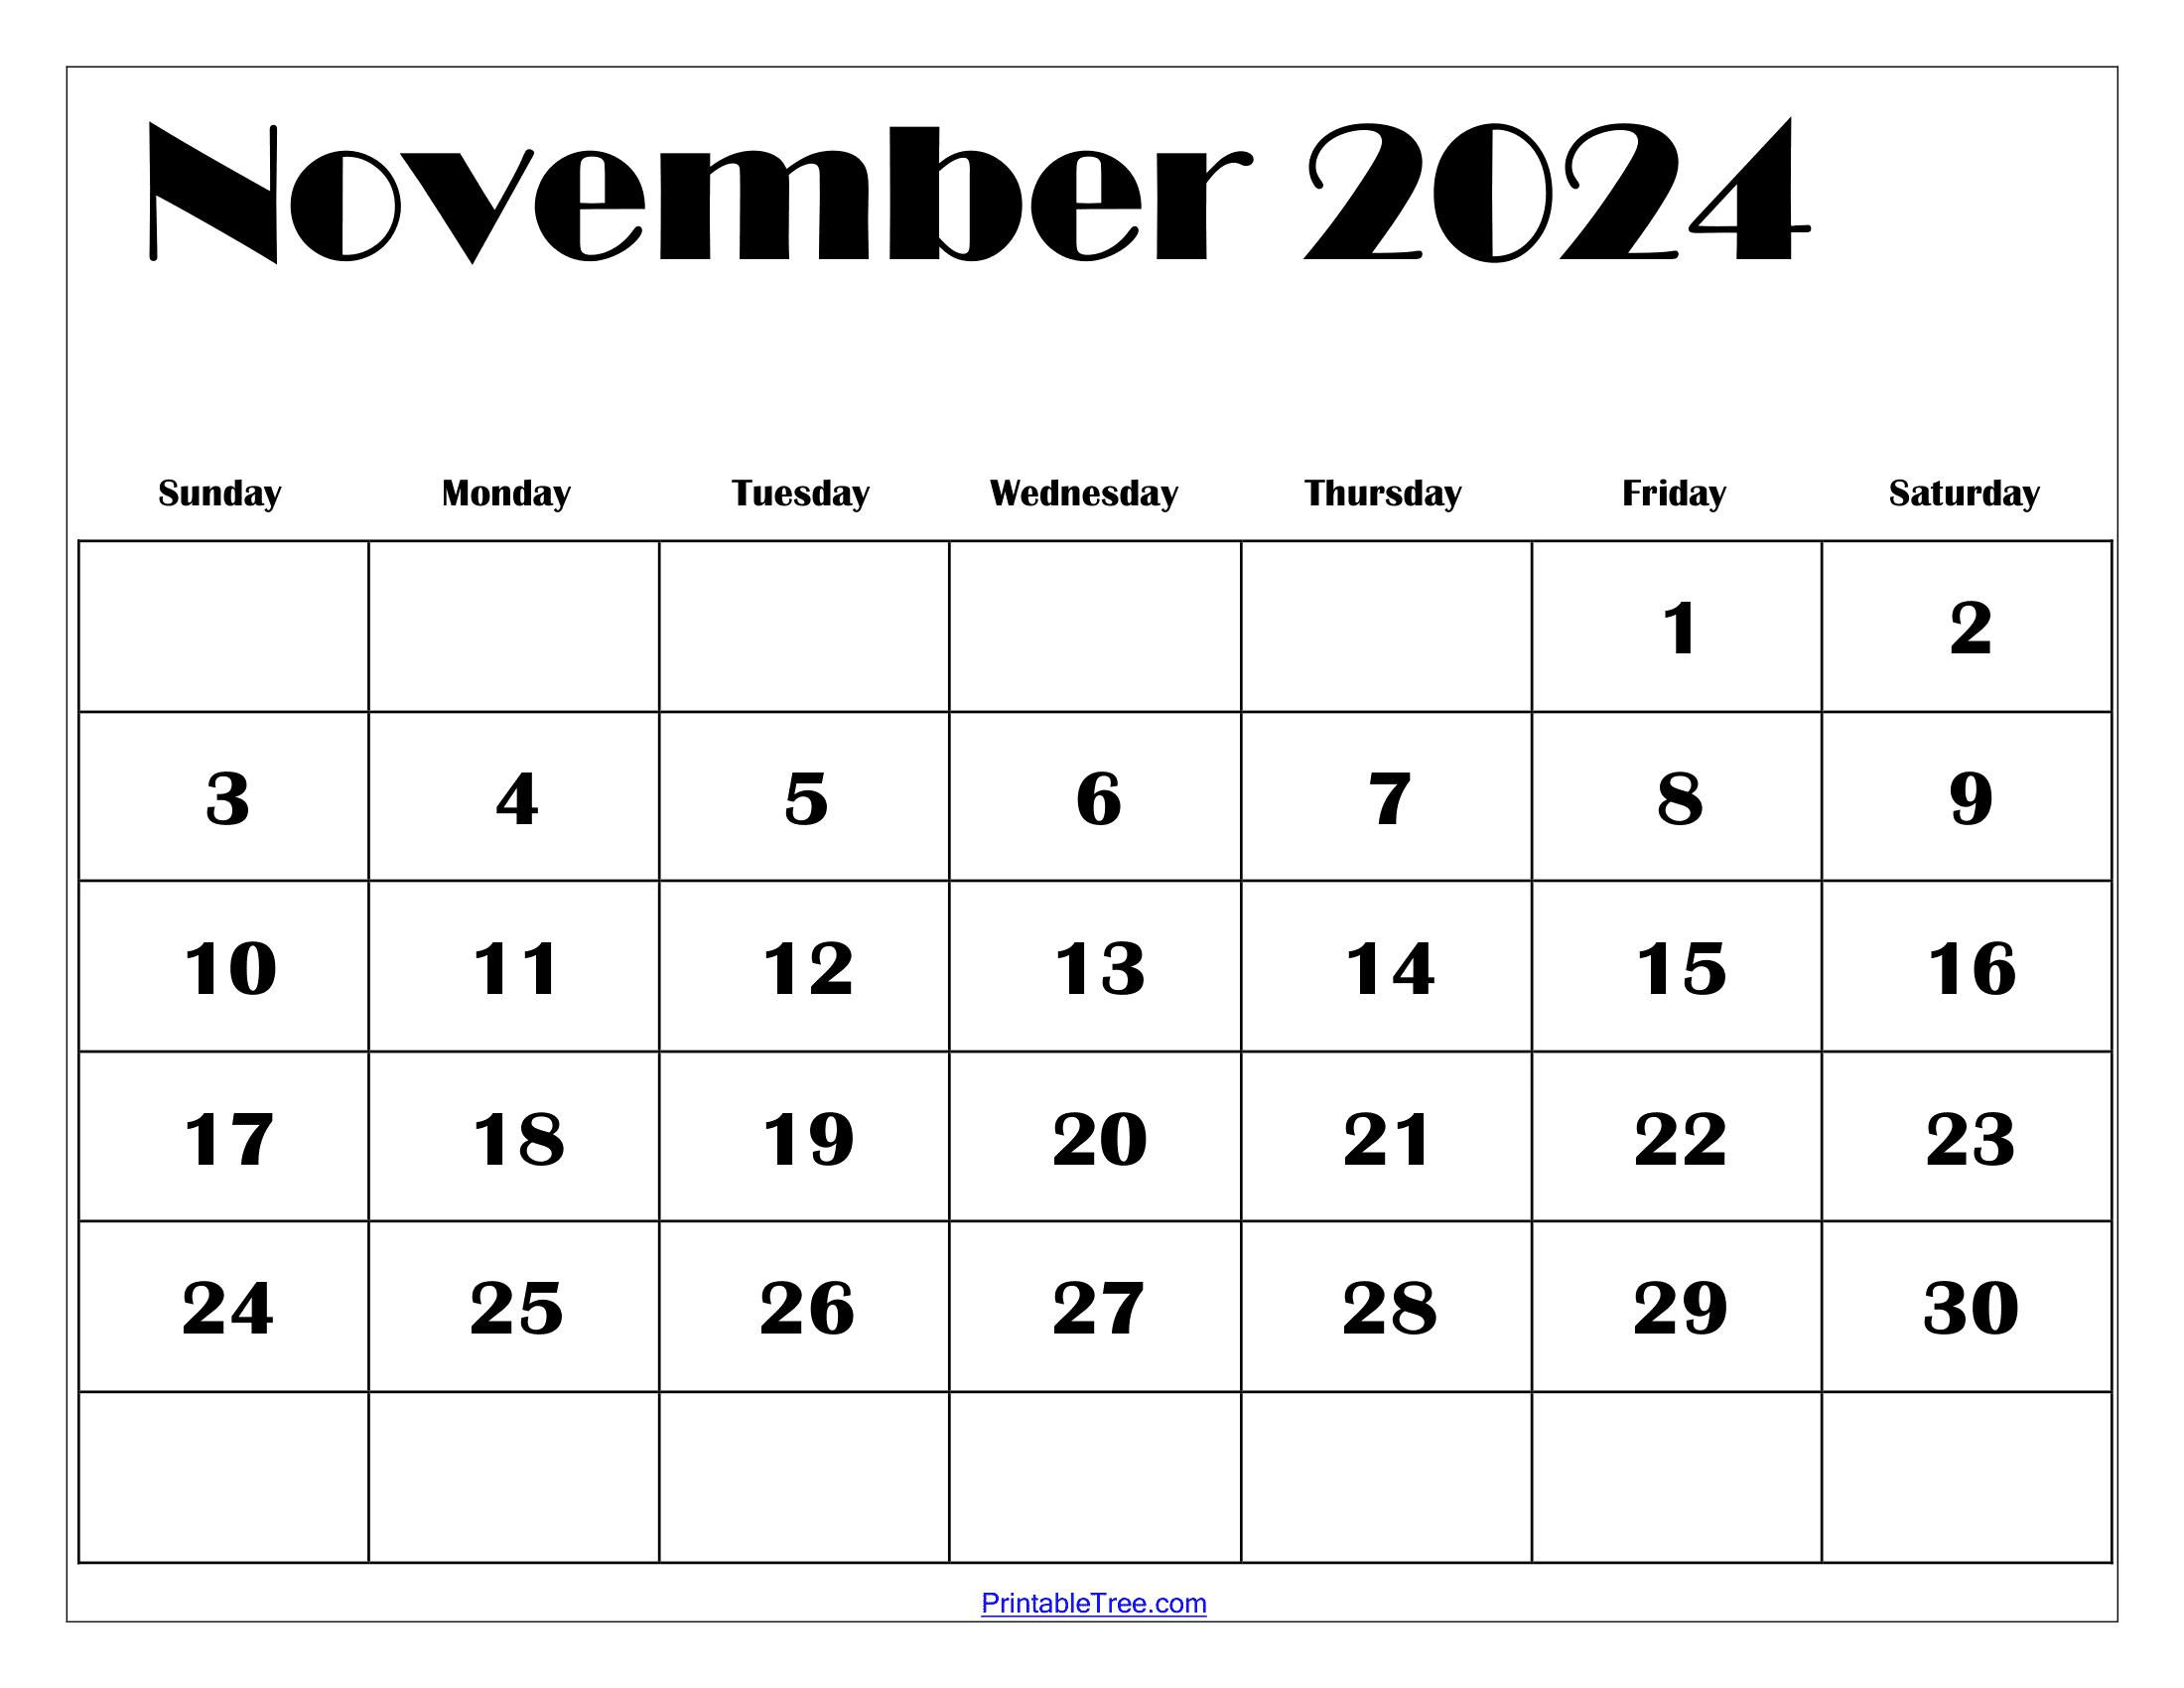 November 2024 Calendar Printable Pdf Template With Holidays for Printable Calendar November 2024